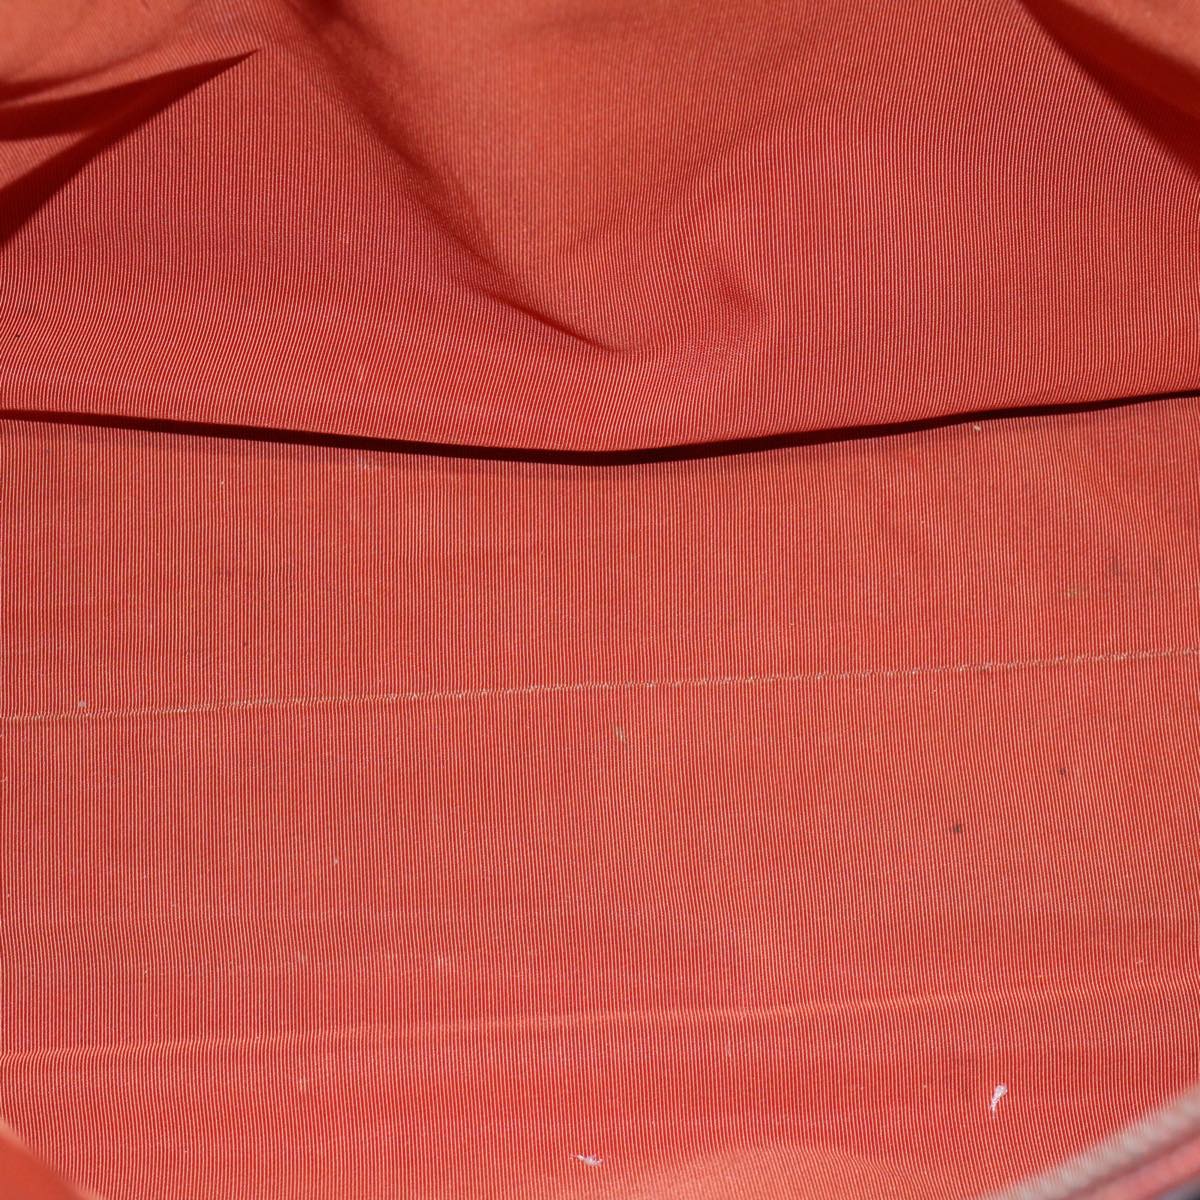 CHANEL Shoulder Bag Leather Orange CC Auth bs8843